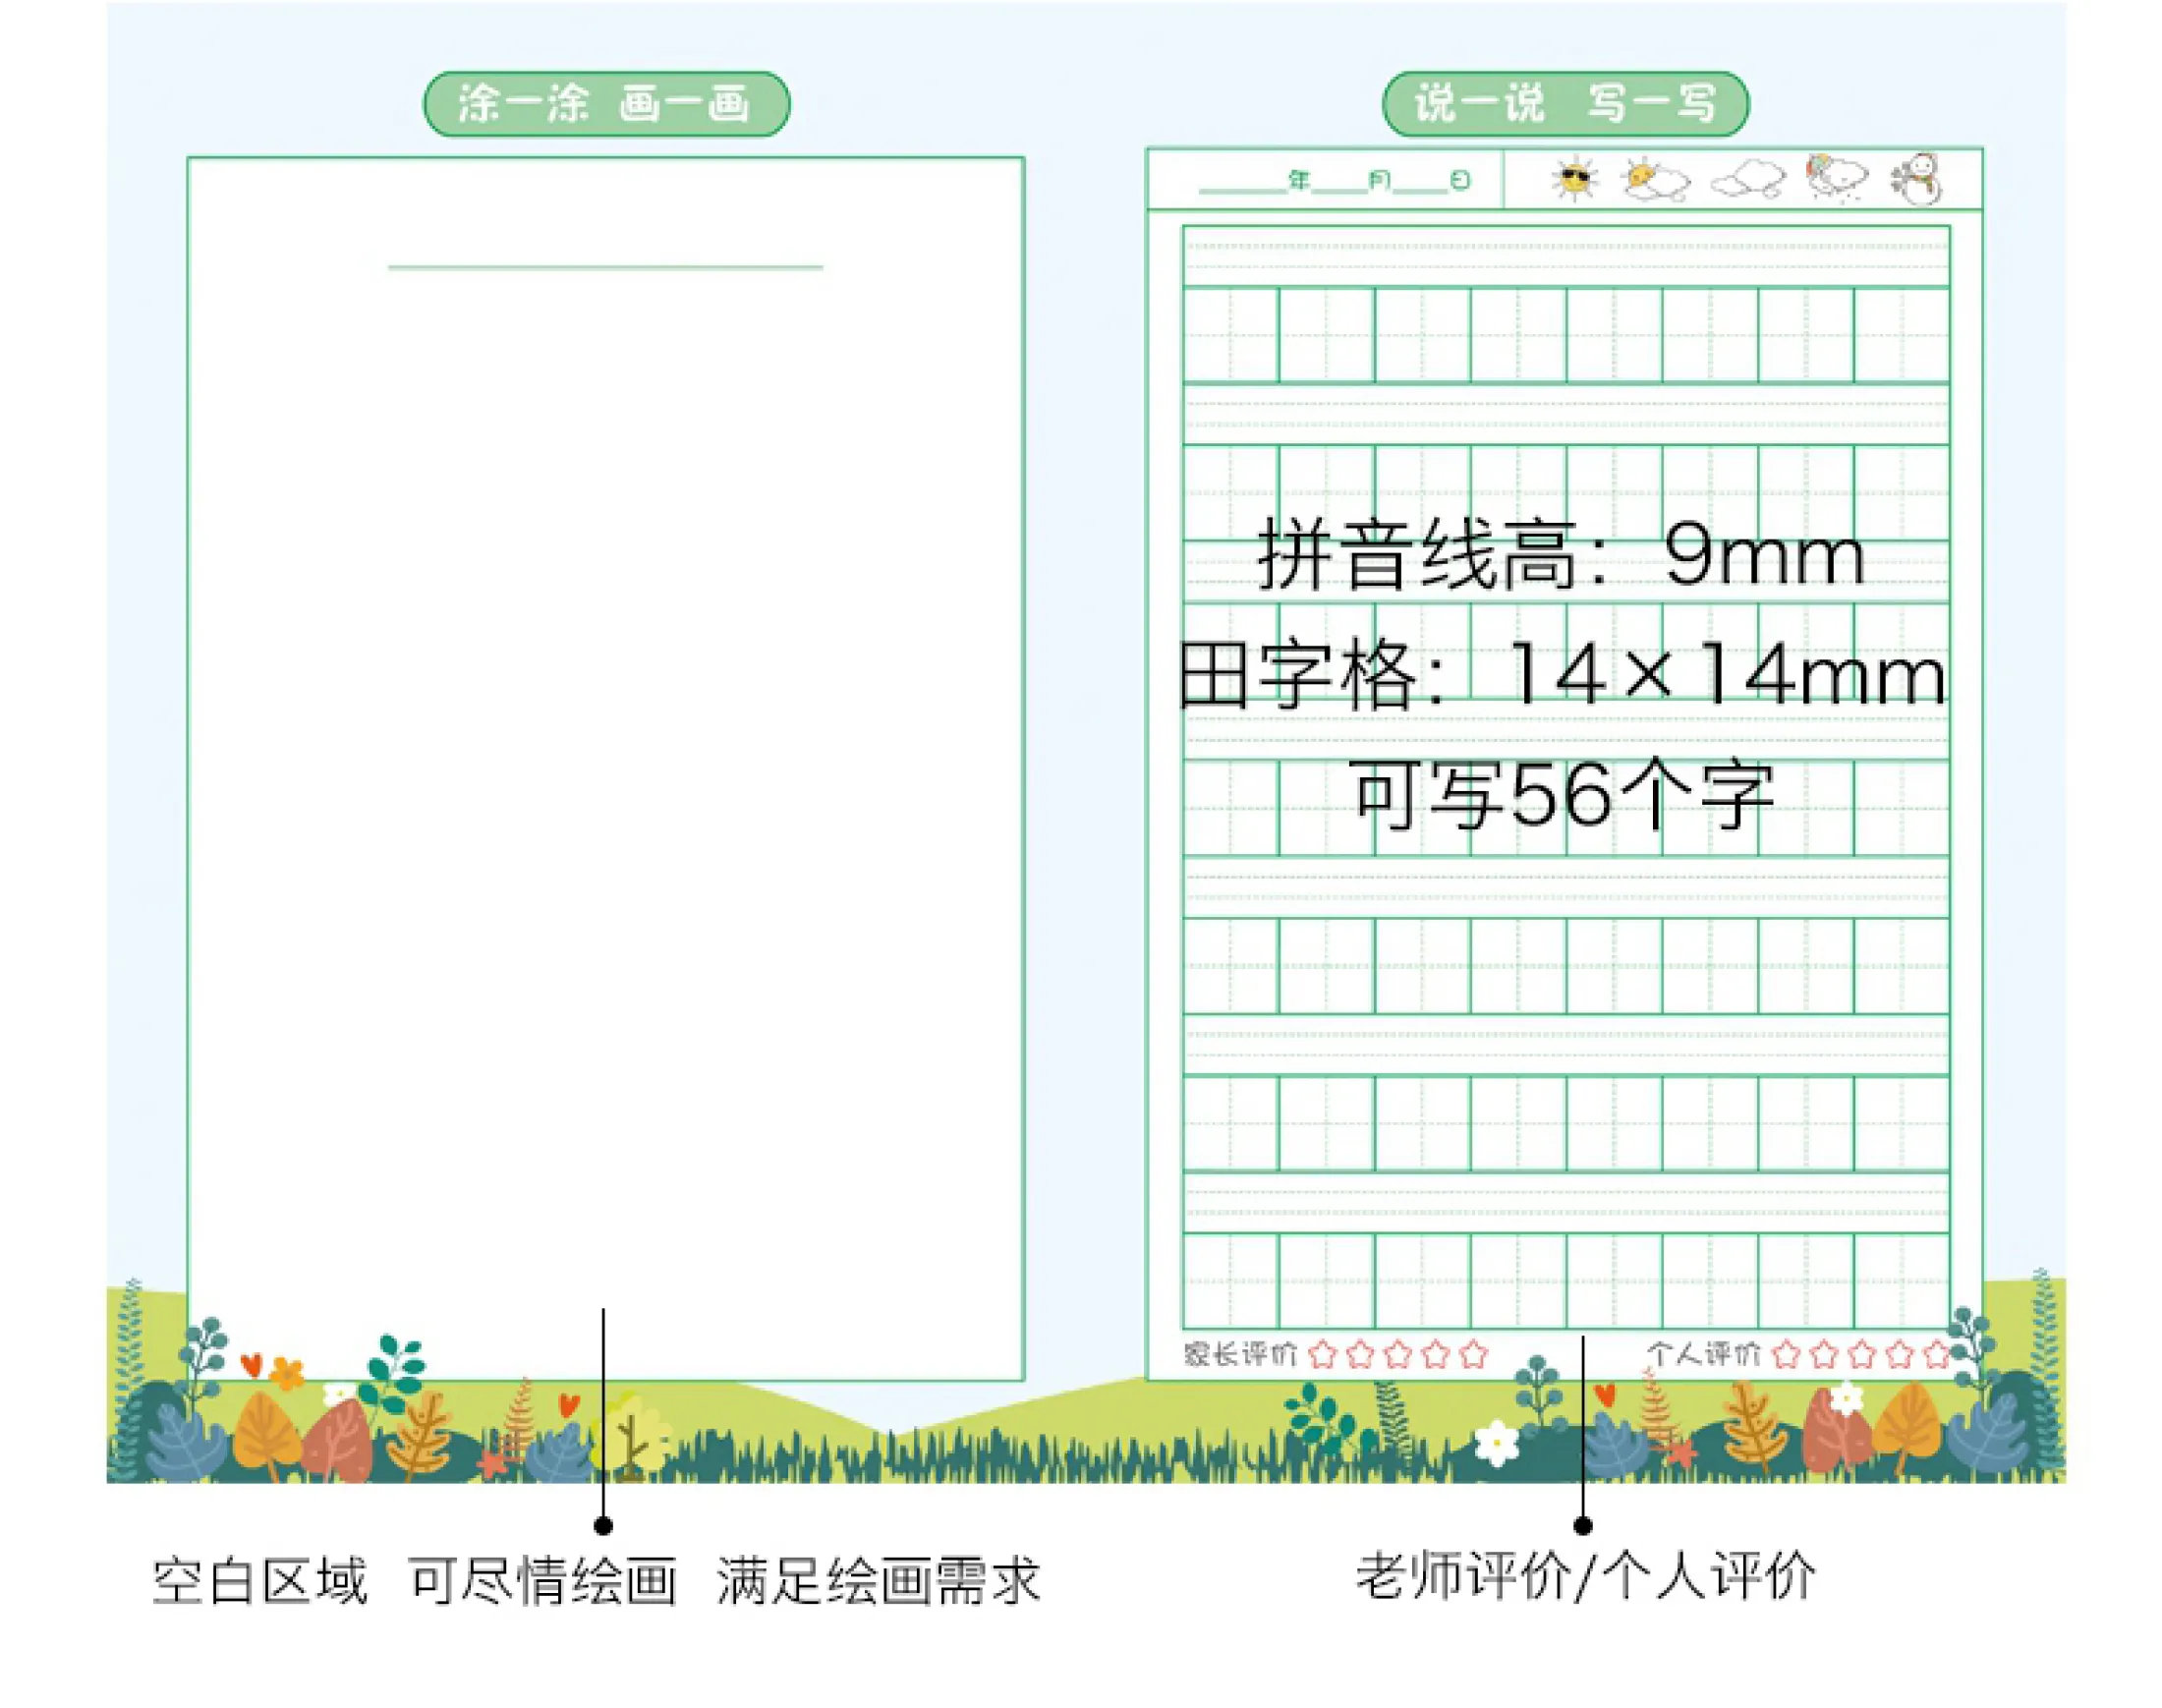 Case Paper Tiger Alat Tulis Pinyin Lukisan Buku Harian Siswa Sekolah Dasar Kartun Swastika Jaringan Menulis Kata Buku Gambar Anak Anak Buku Pelajaran Rumah Anak Muda Bahasa Mandarin Zhou Ji Buku Gambar Satu